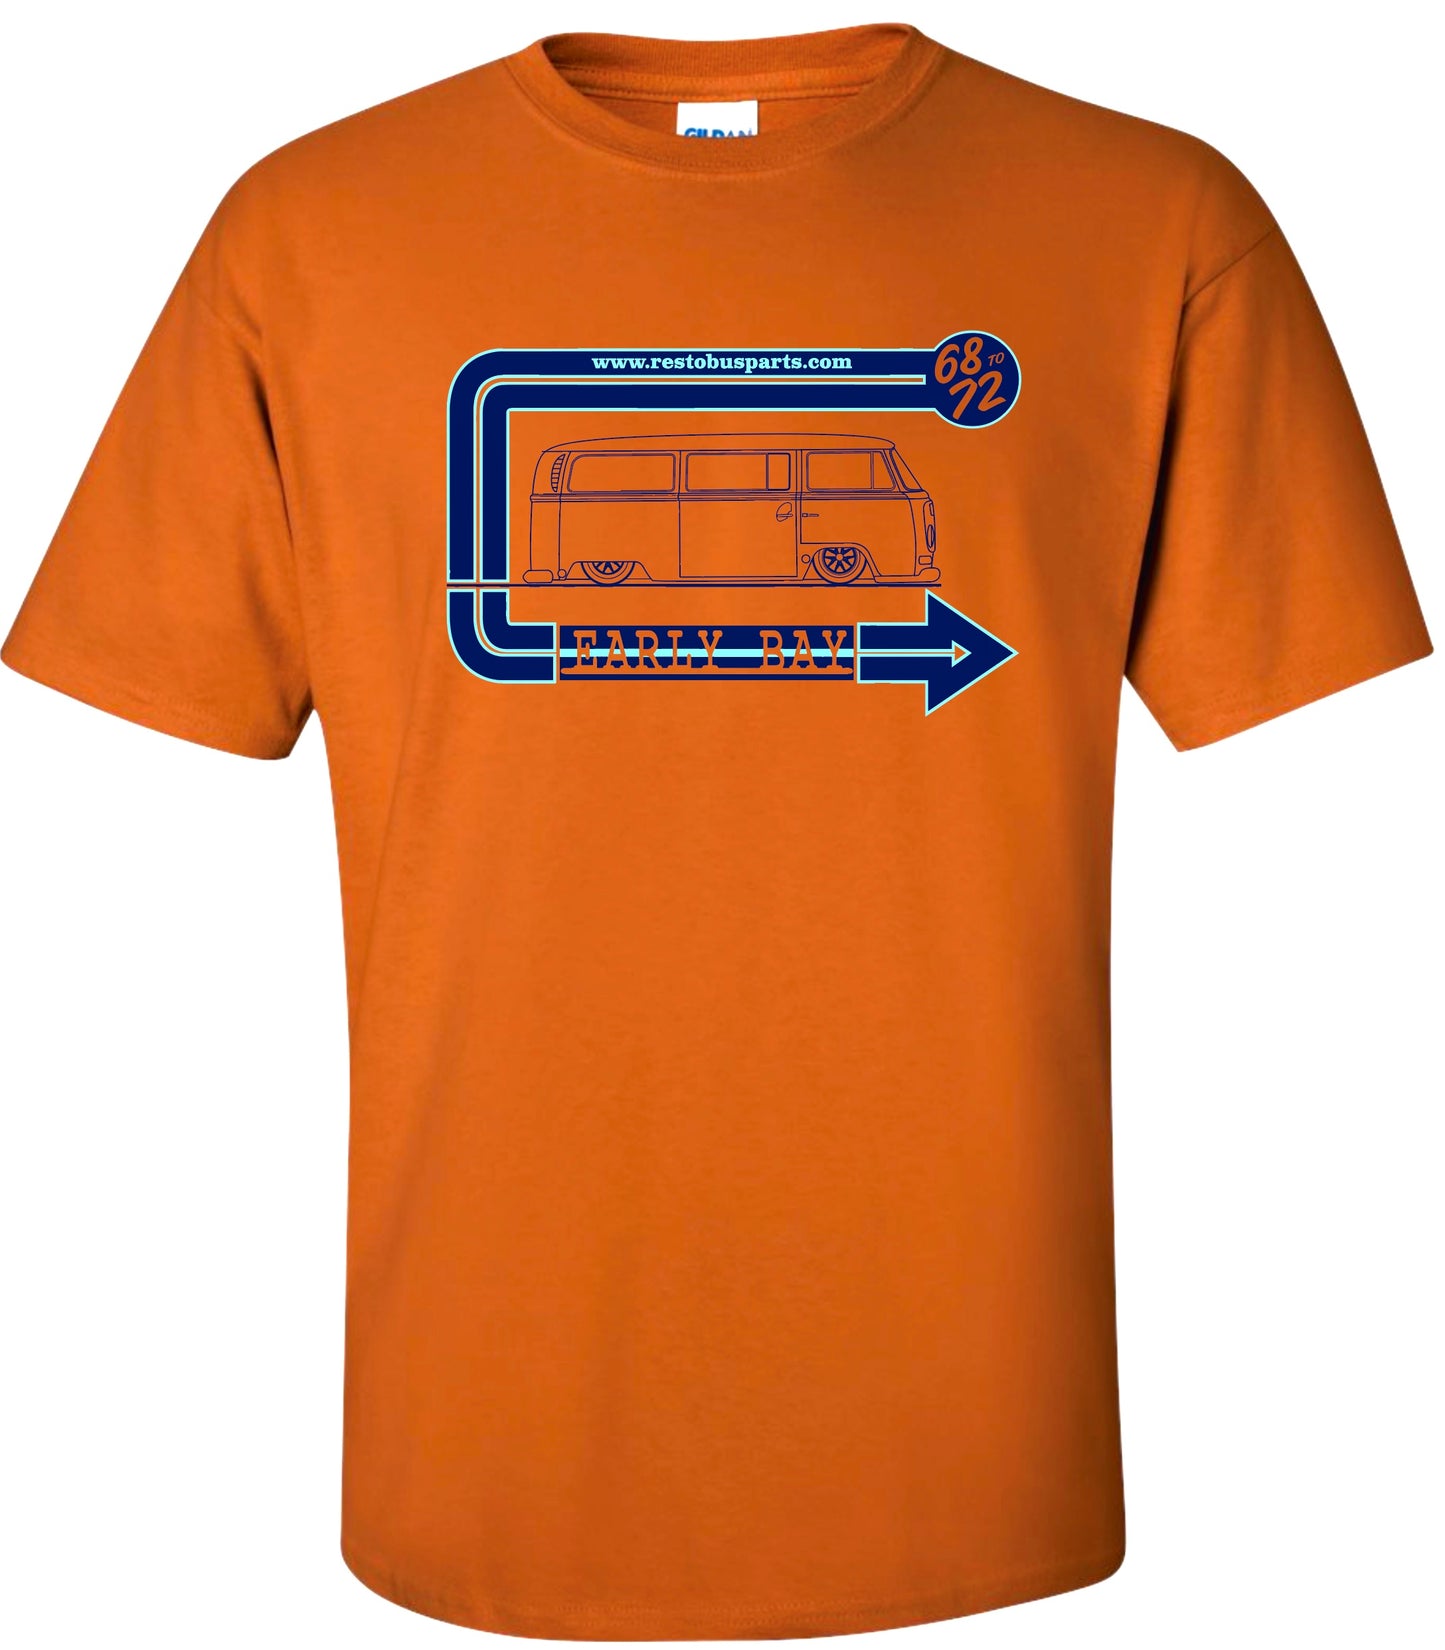 Earlybay t-shirt - Texas Orange